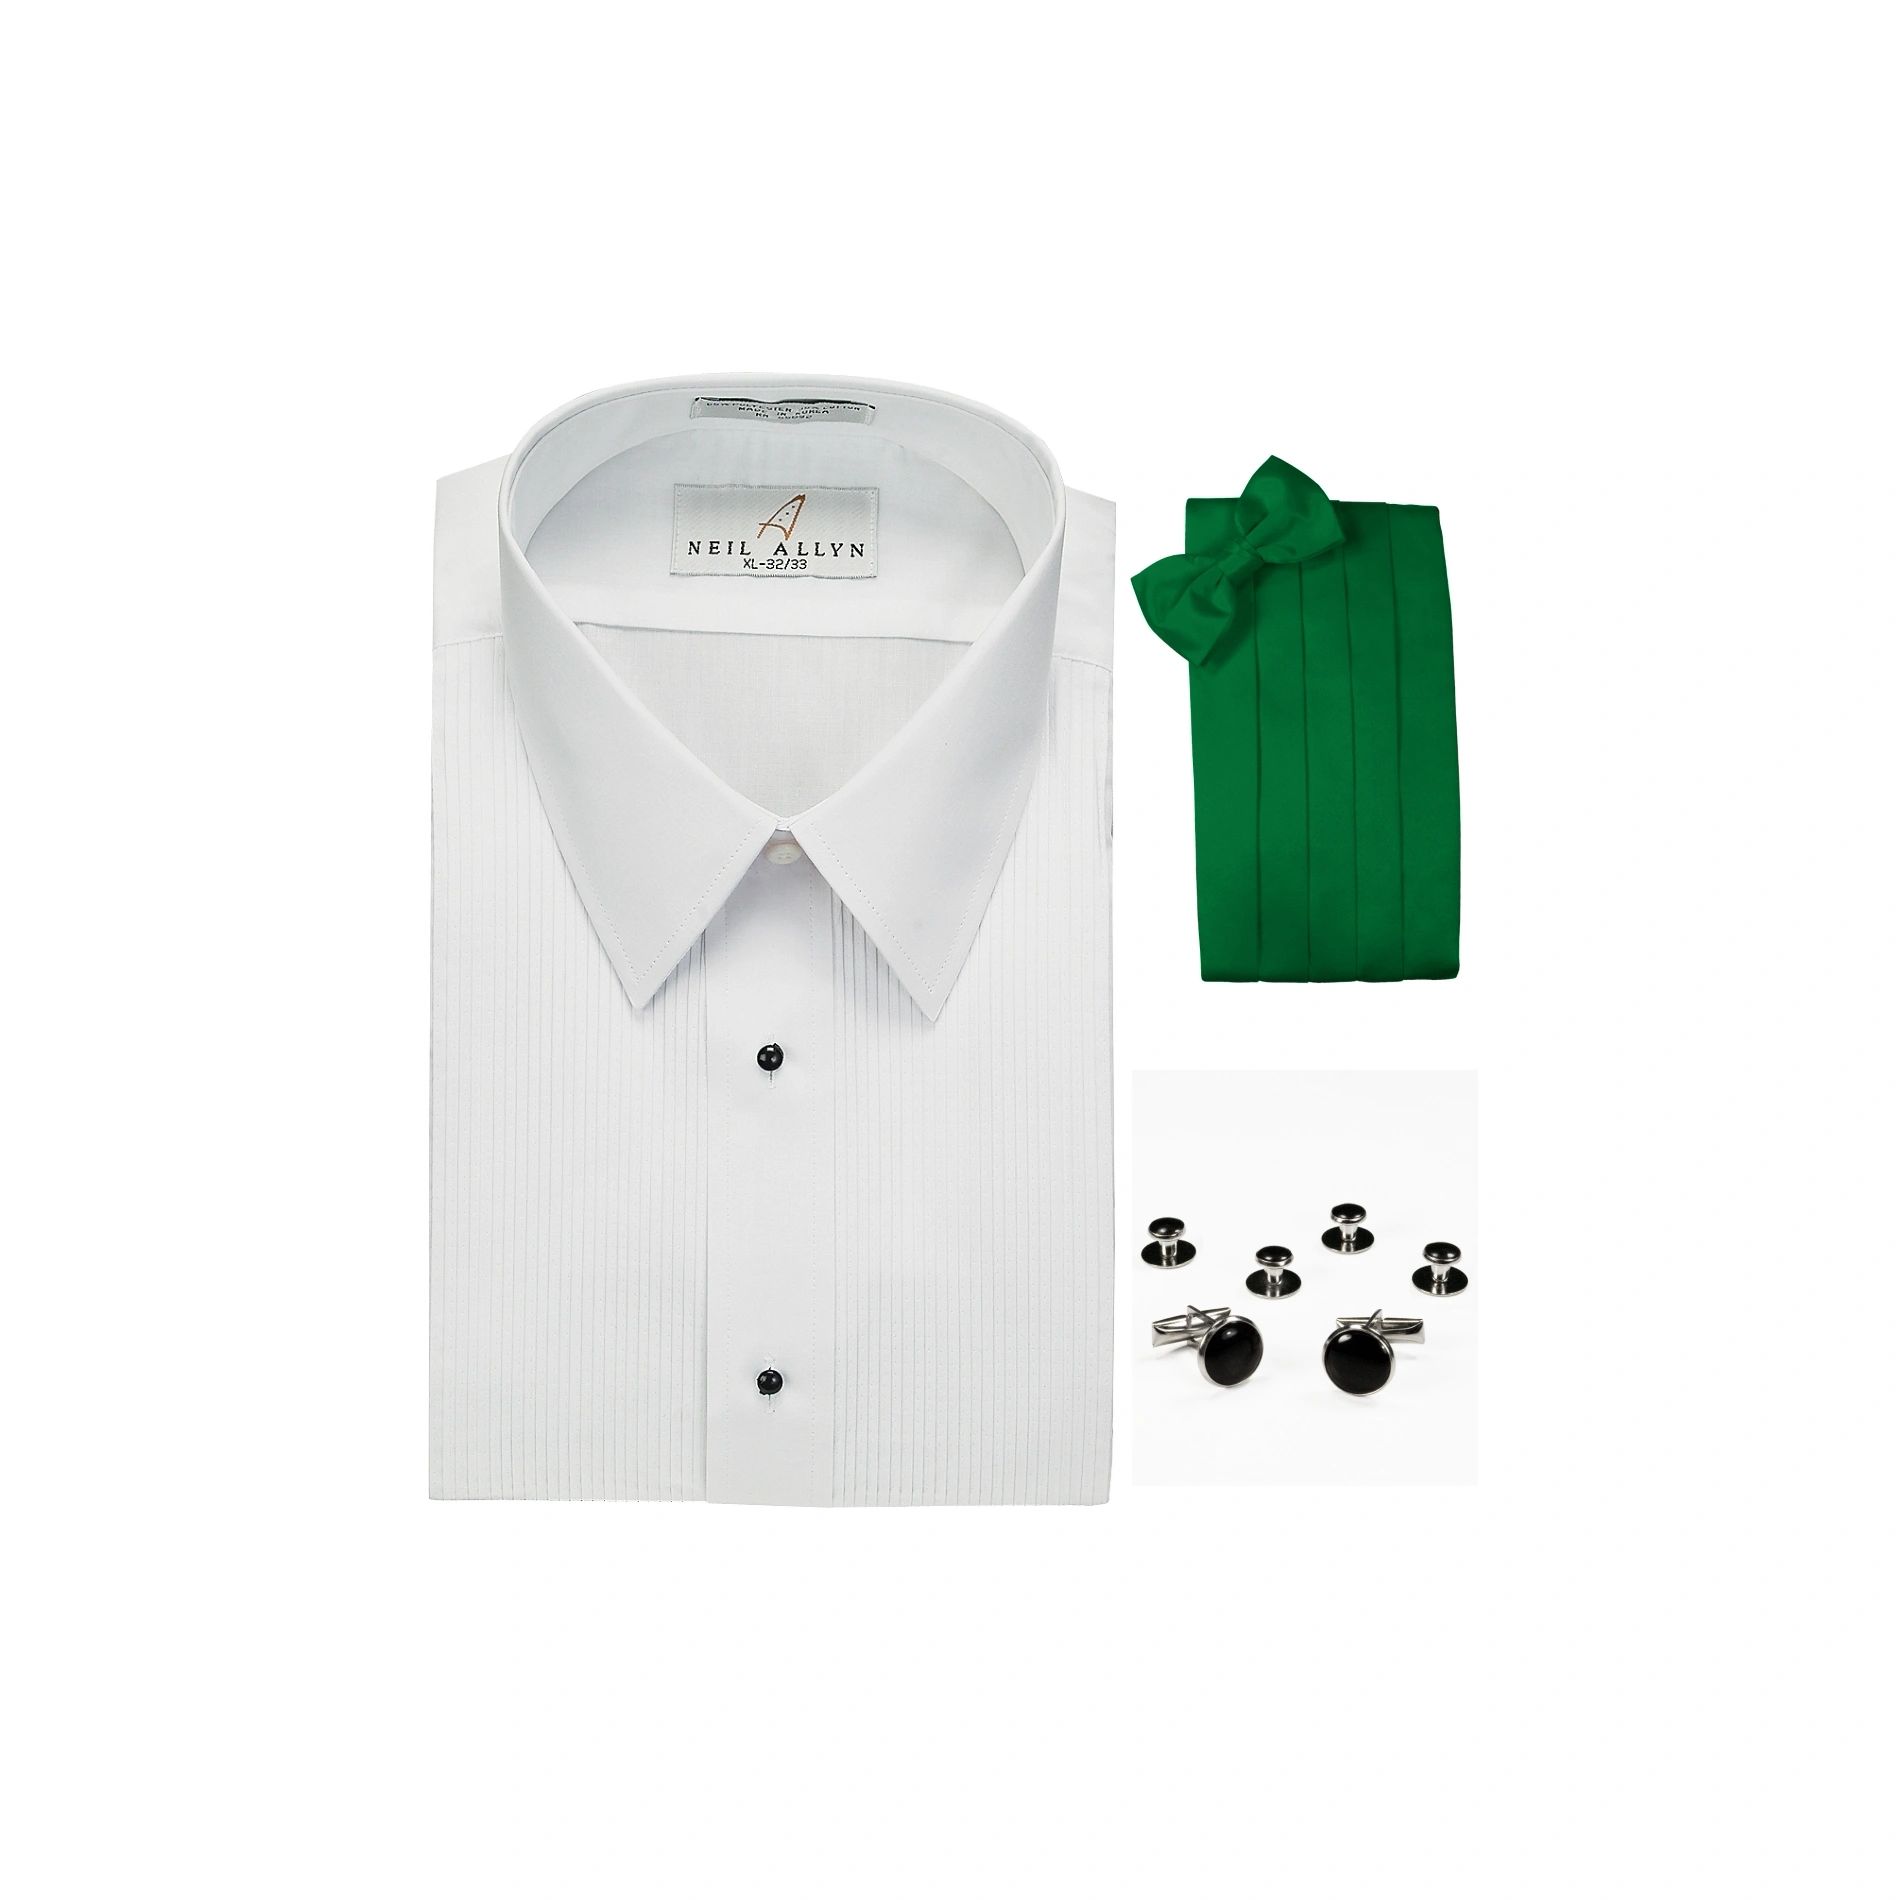 Neil Allyn Lay-Down Collar 1/8" Pleats Formal Tuxedo Shirt, Kelly Green Cummerbund, Bow-Tie, Cuff Links & Studs Set